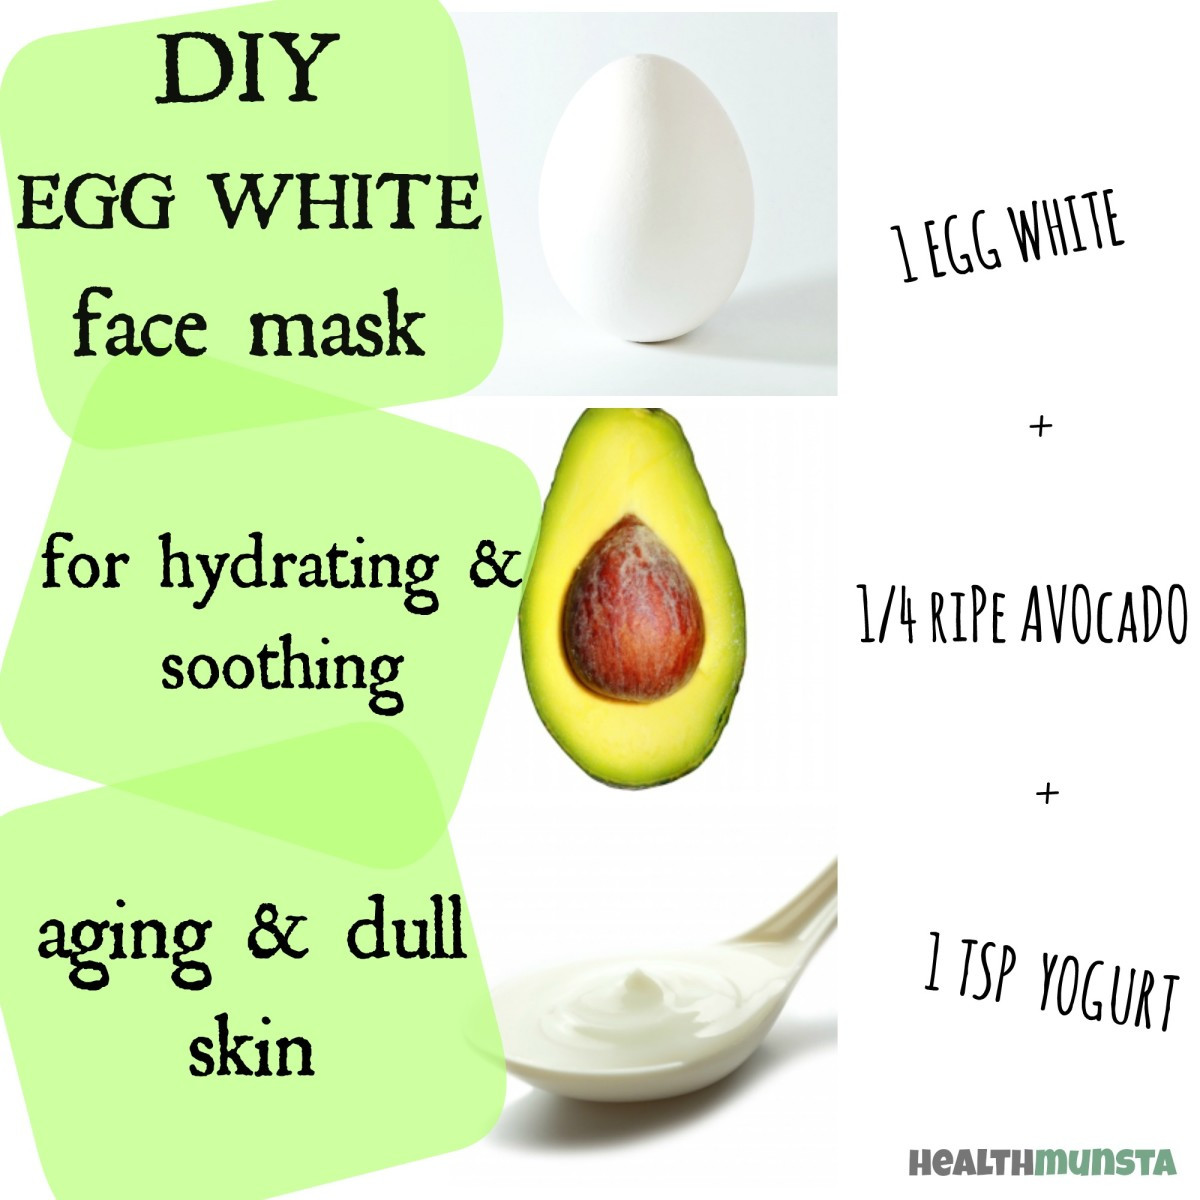 DIY Egg White Mask
 DIY Egg White Face Mask Recipes for Beautiful Skin